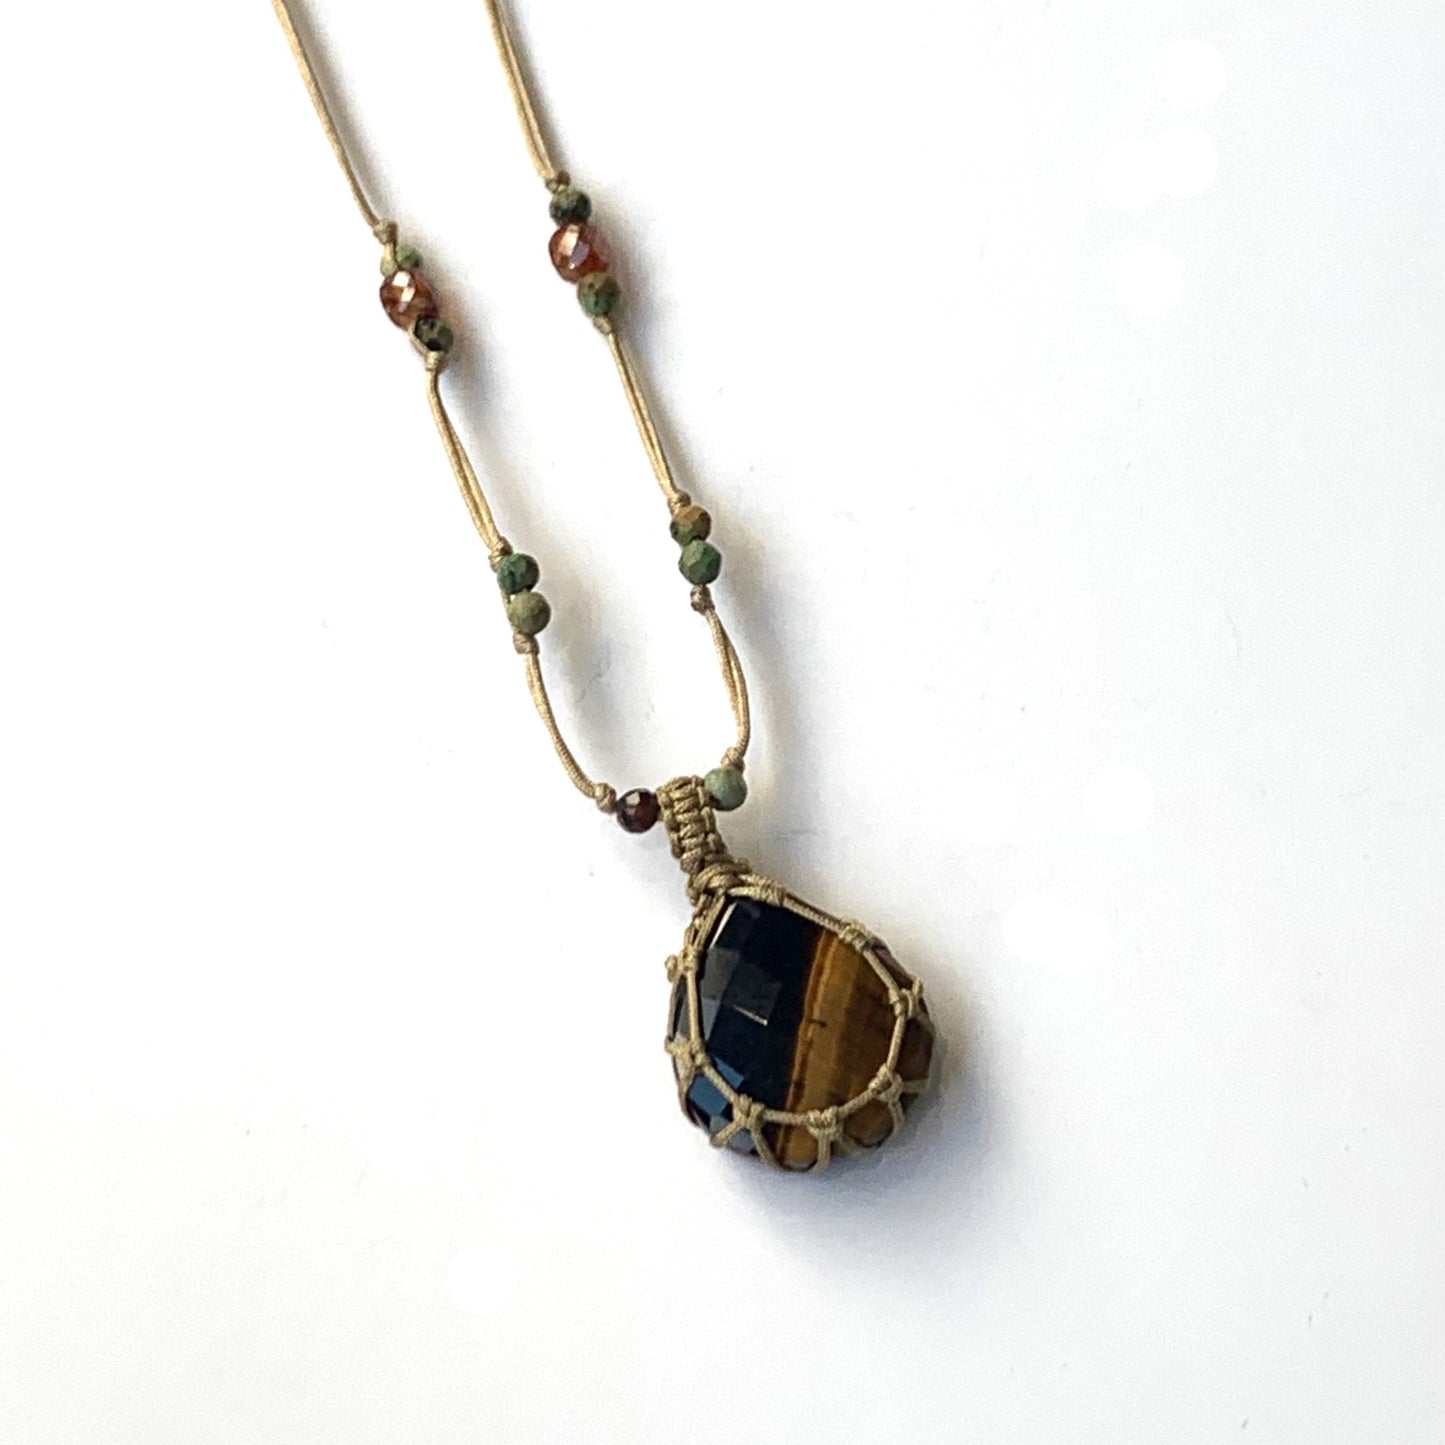 "Stone tear" necklace